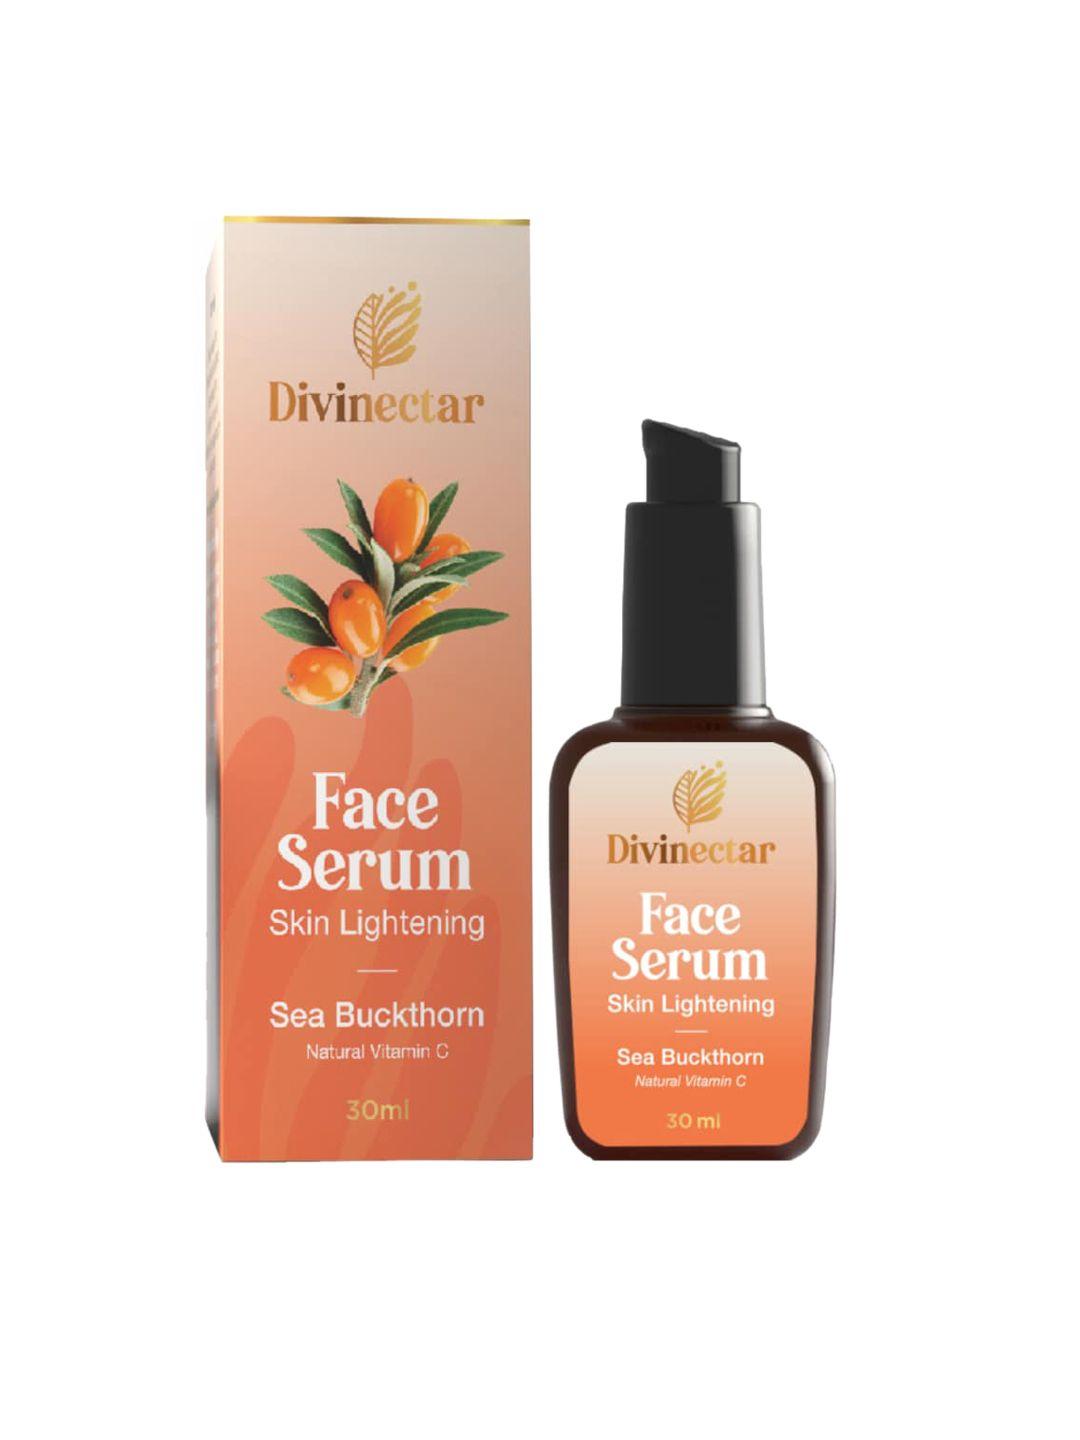 divinectar unisex face serum skin lightening with sea buckthorn oil & vitamin c - 30ml